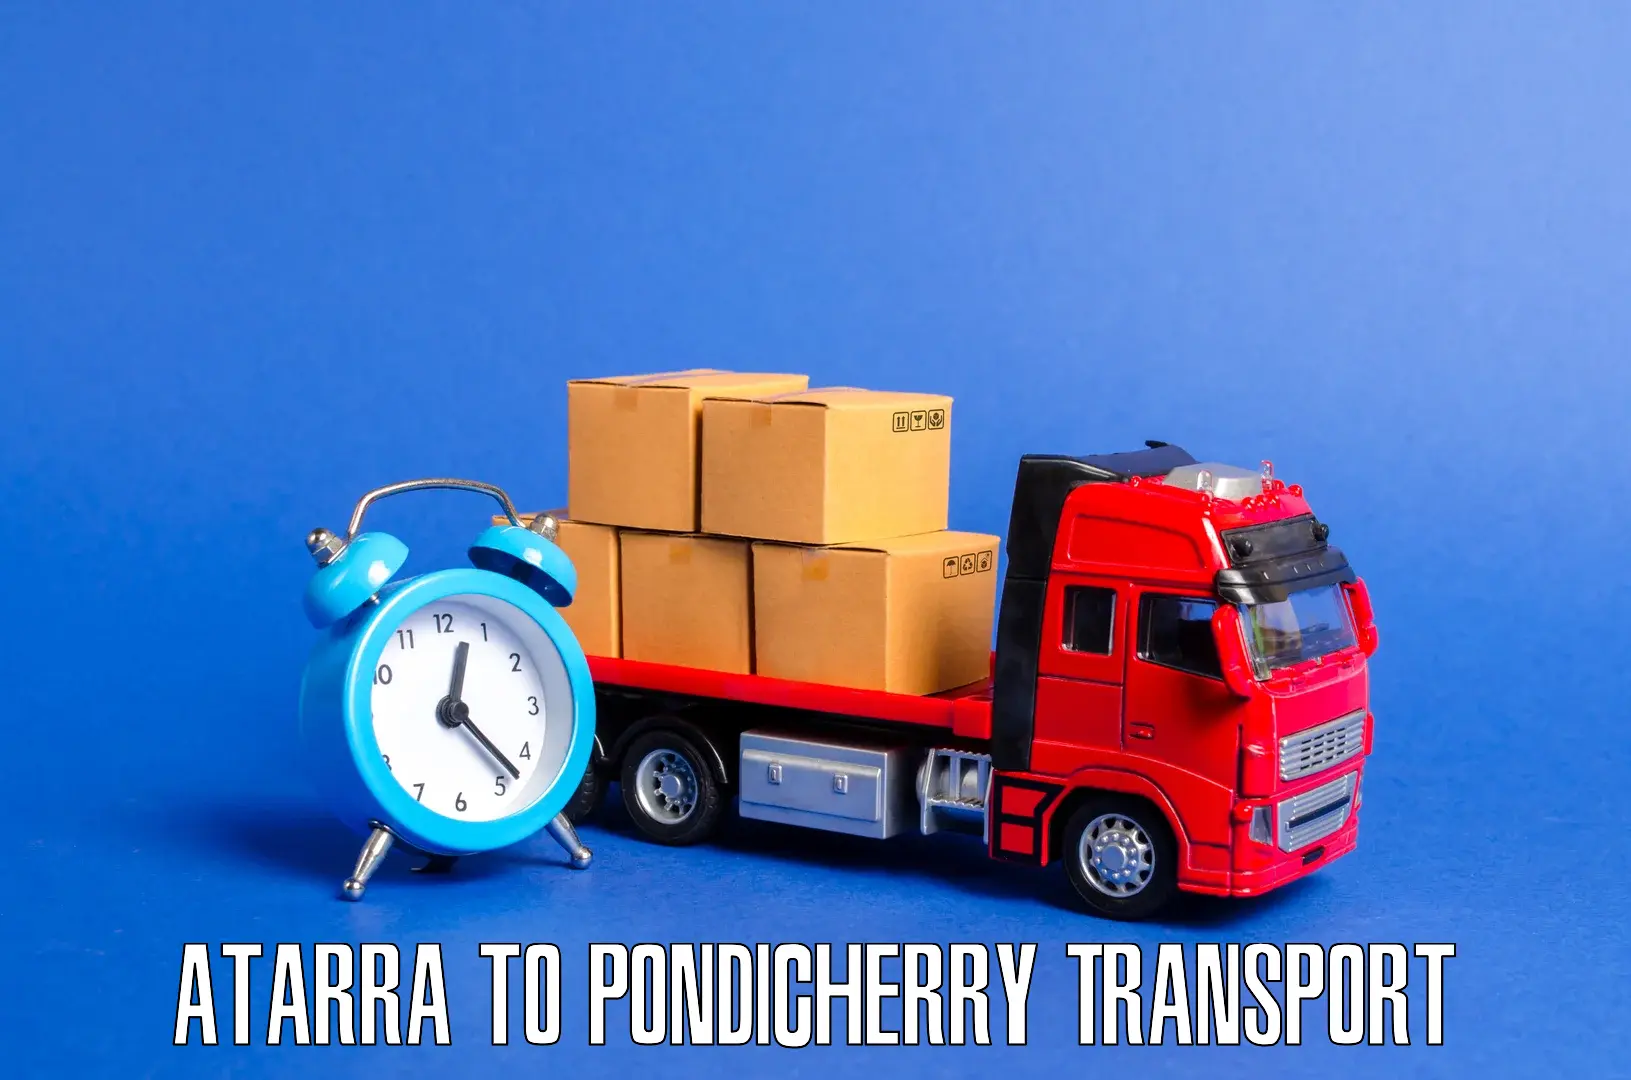 Nearby transport service Atarra to Pondicherry